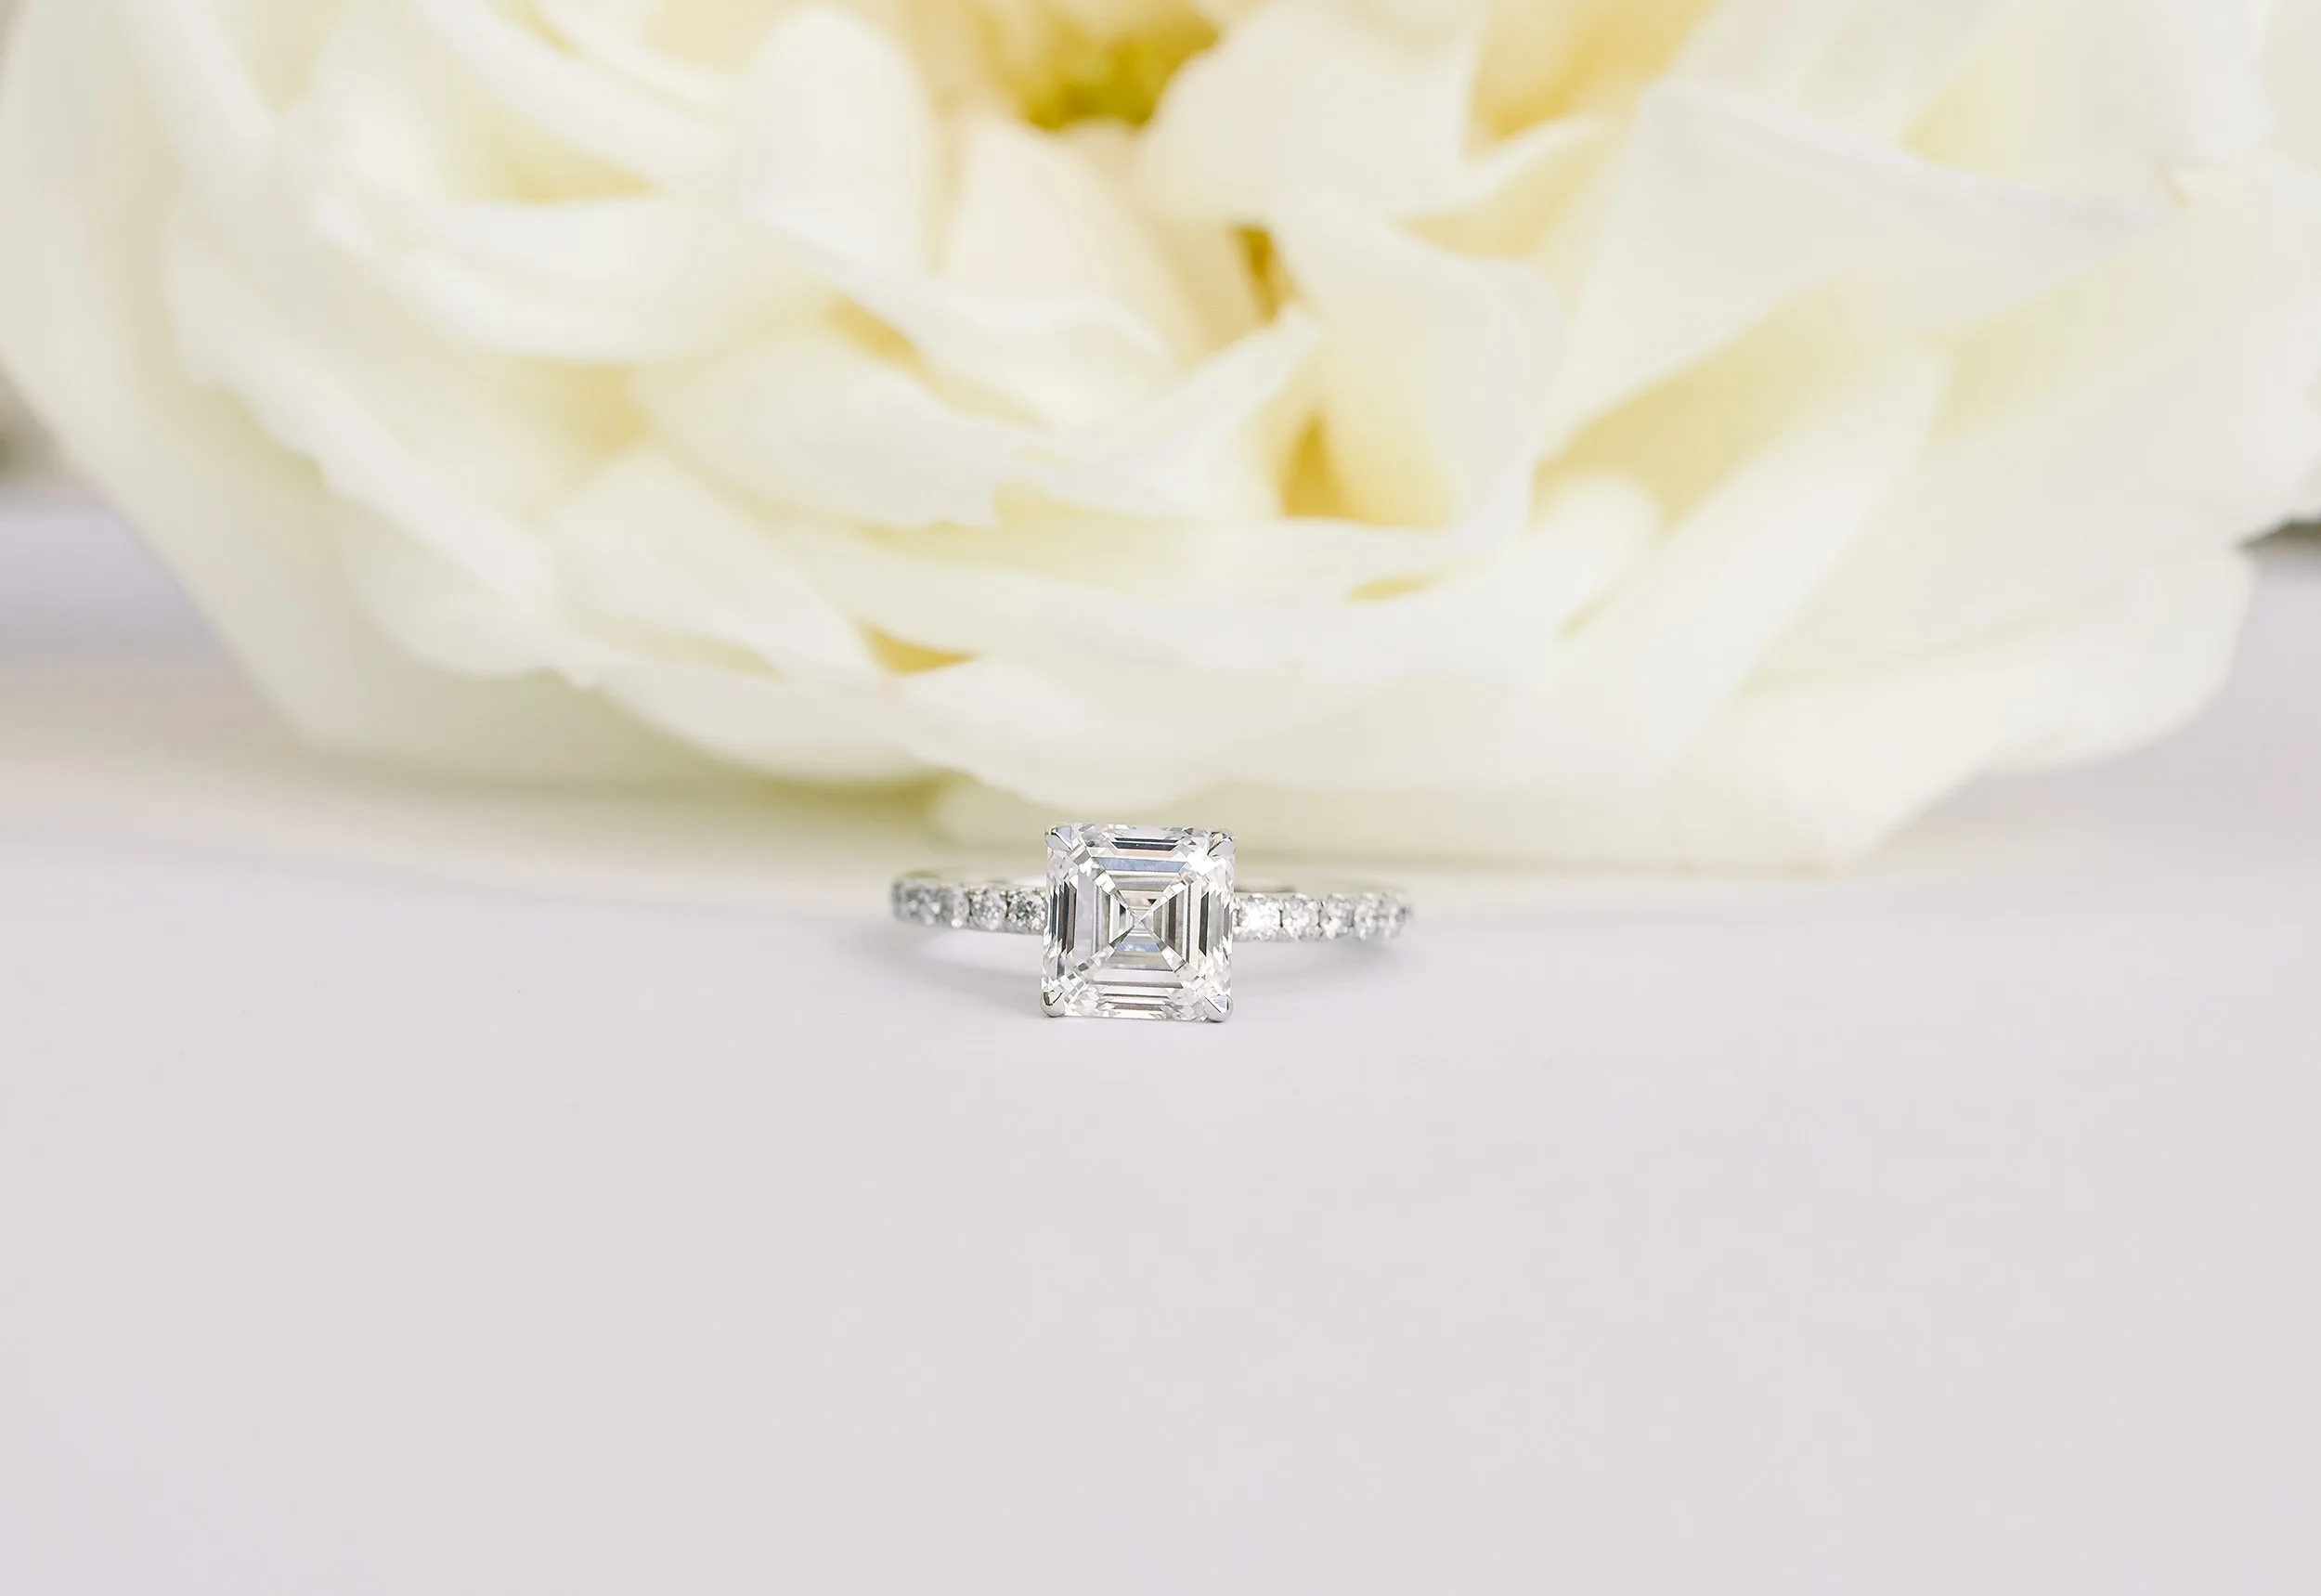 Tiffany Novo™ Round Emerald Ring in Platinum with Pavé Diamonds